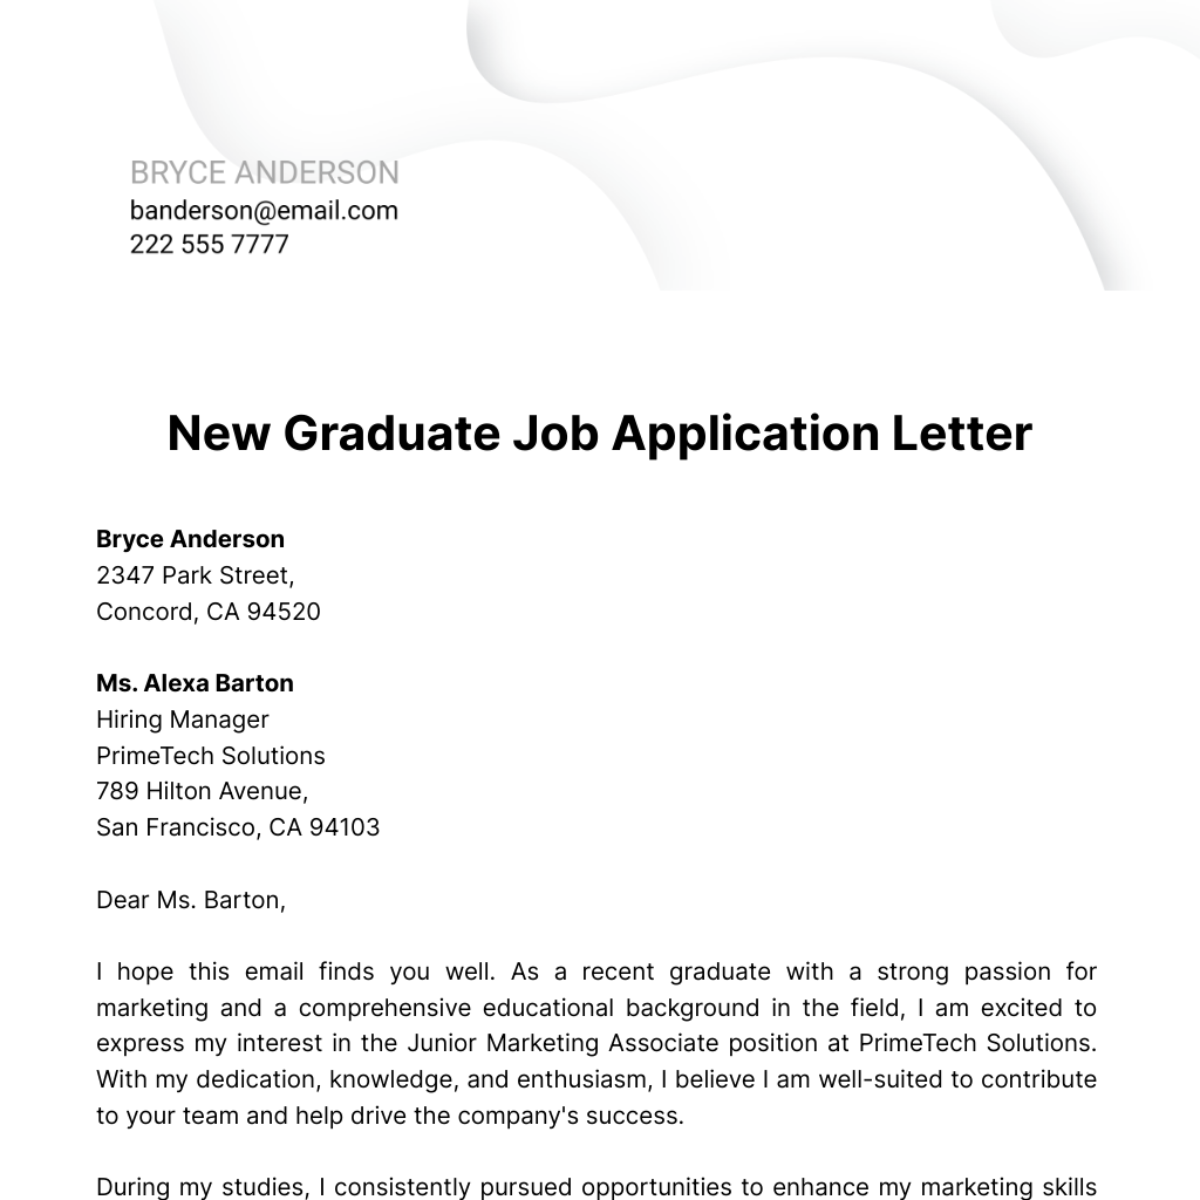 New Graduate Job Application Letter  Template